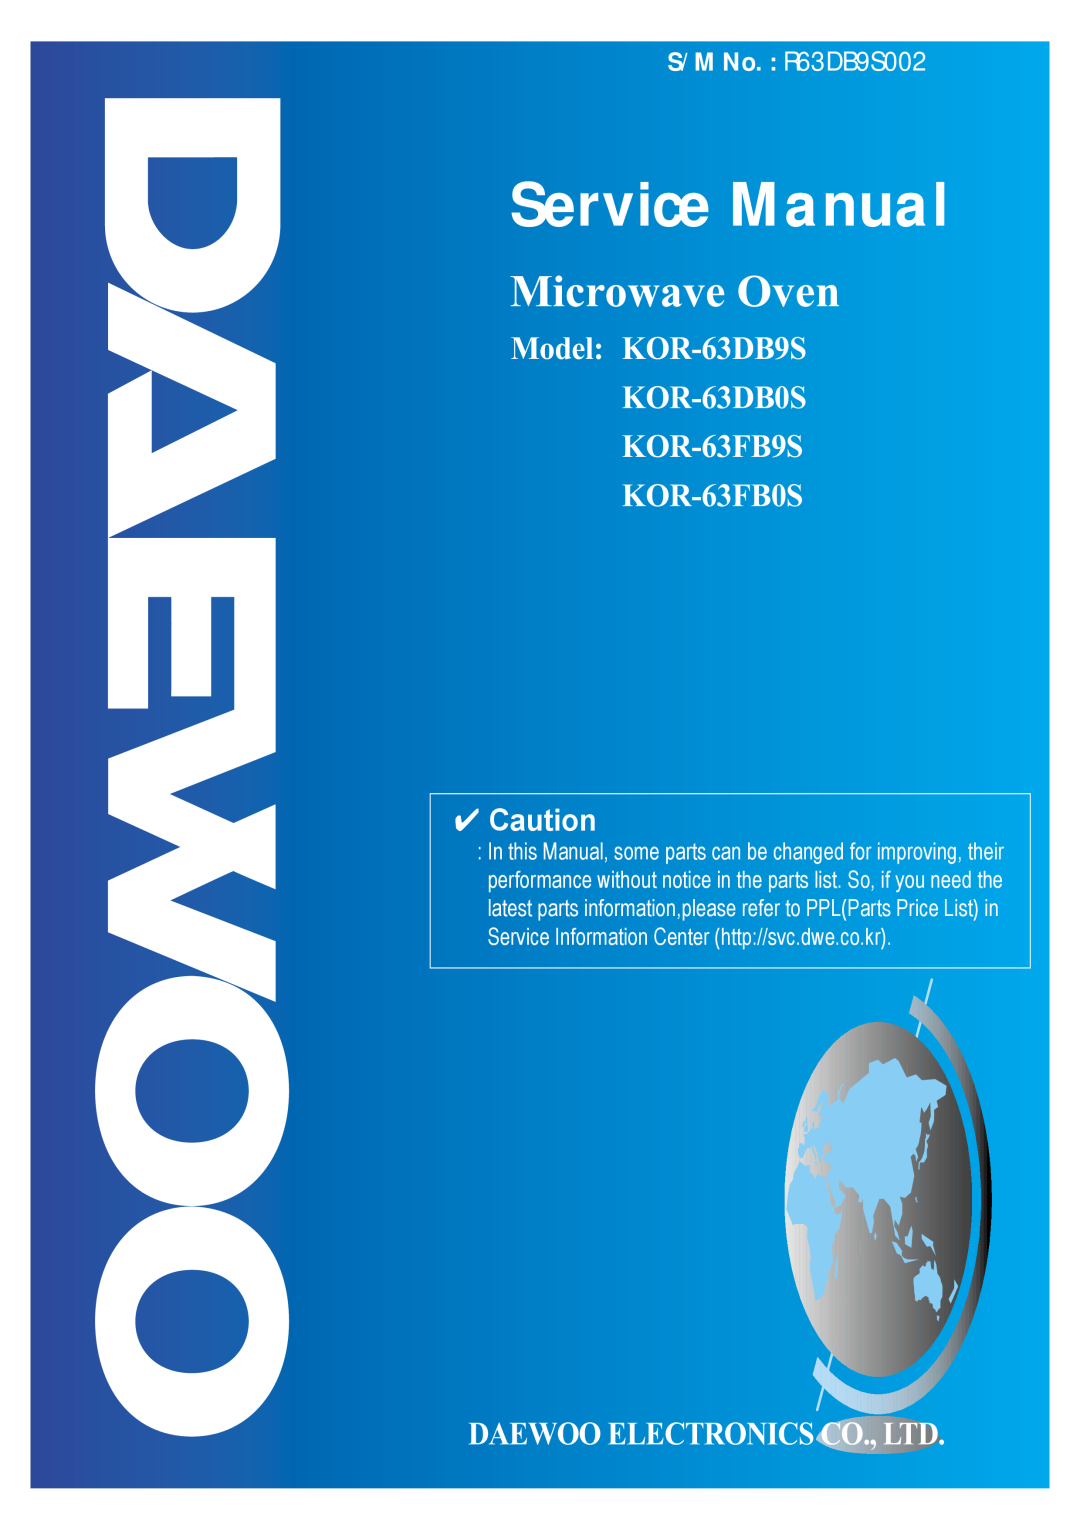 Daewoo service manual Microwave Oven, Model KOR-63DB9S KOR-63DB0S KOR-63FB9S KOR-63FB0S, S/M No. R63DB9S002 